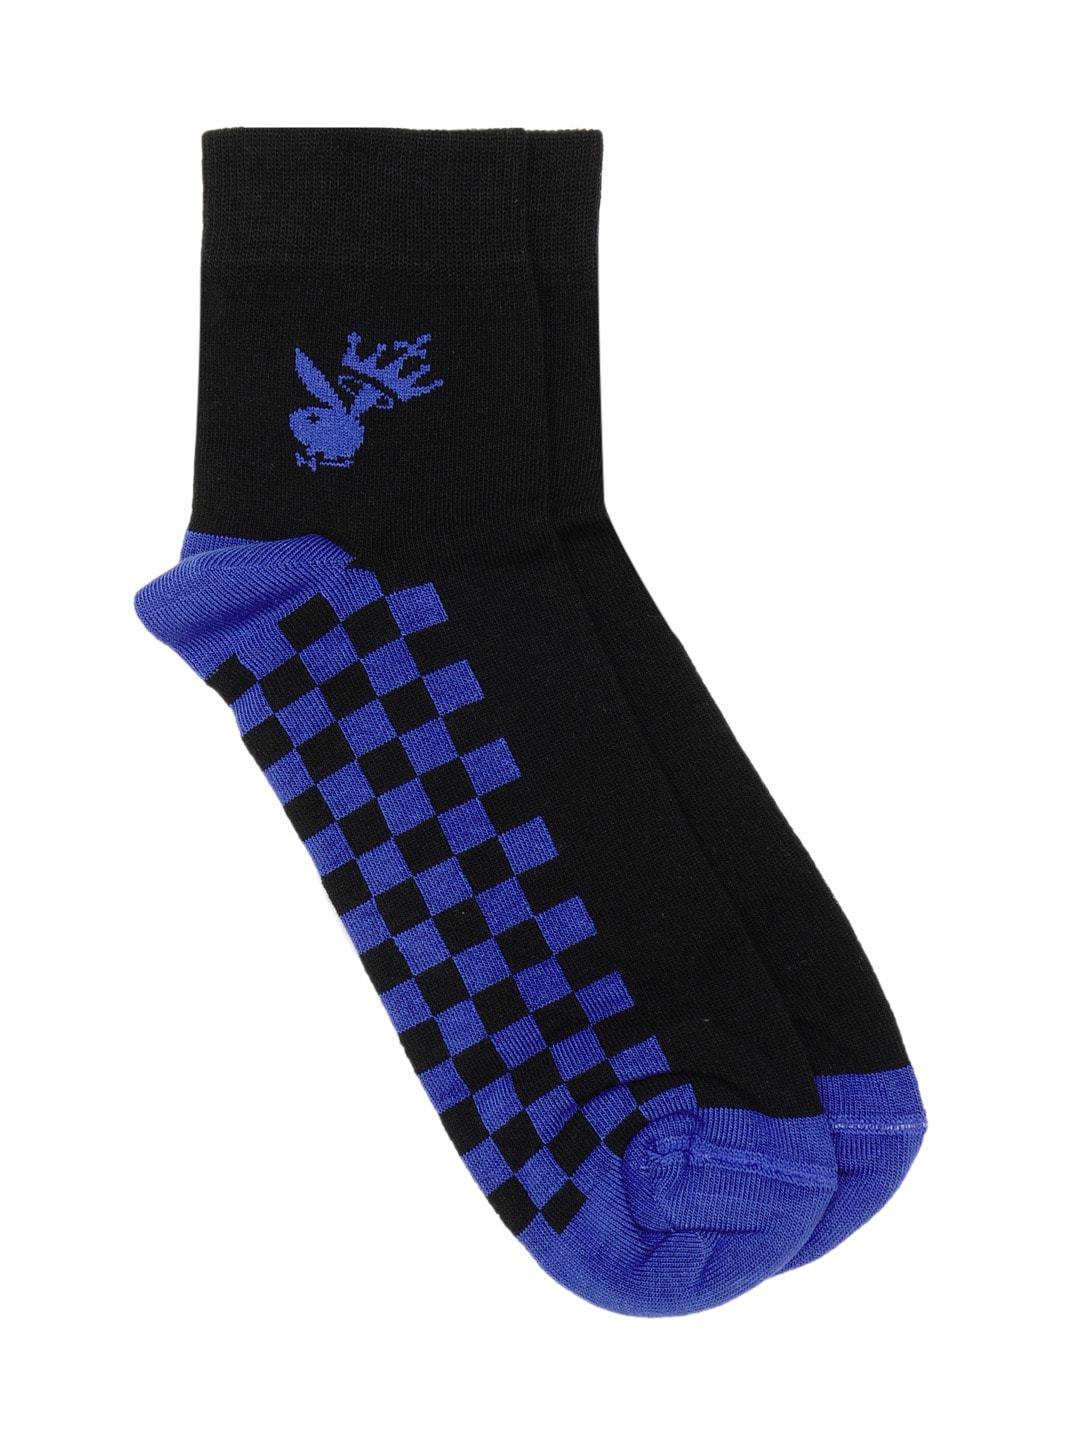 Playboy Men Black and Blue Socks